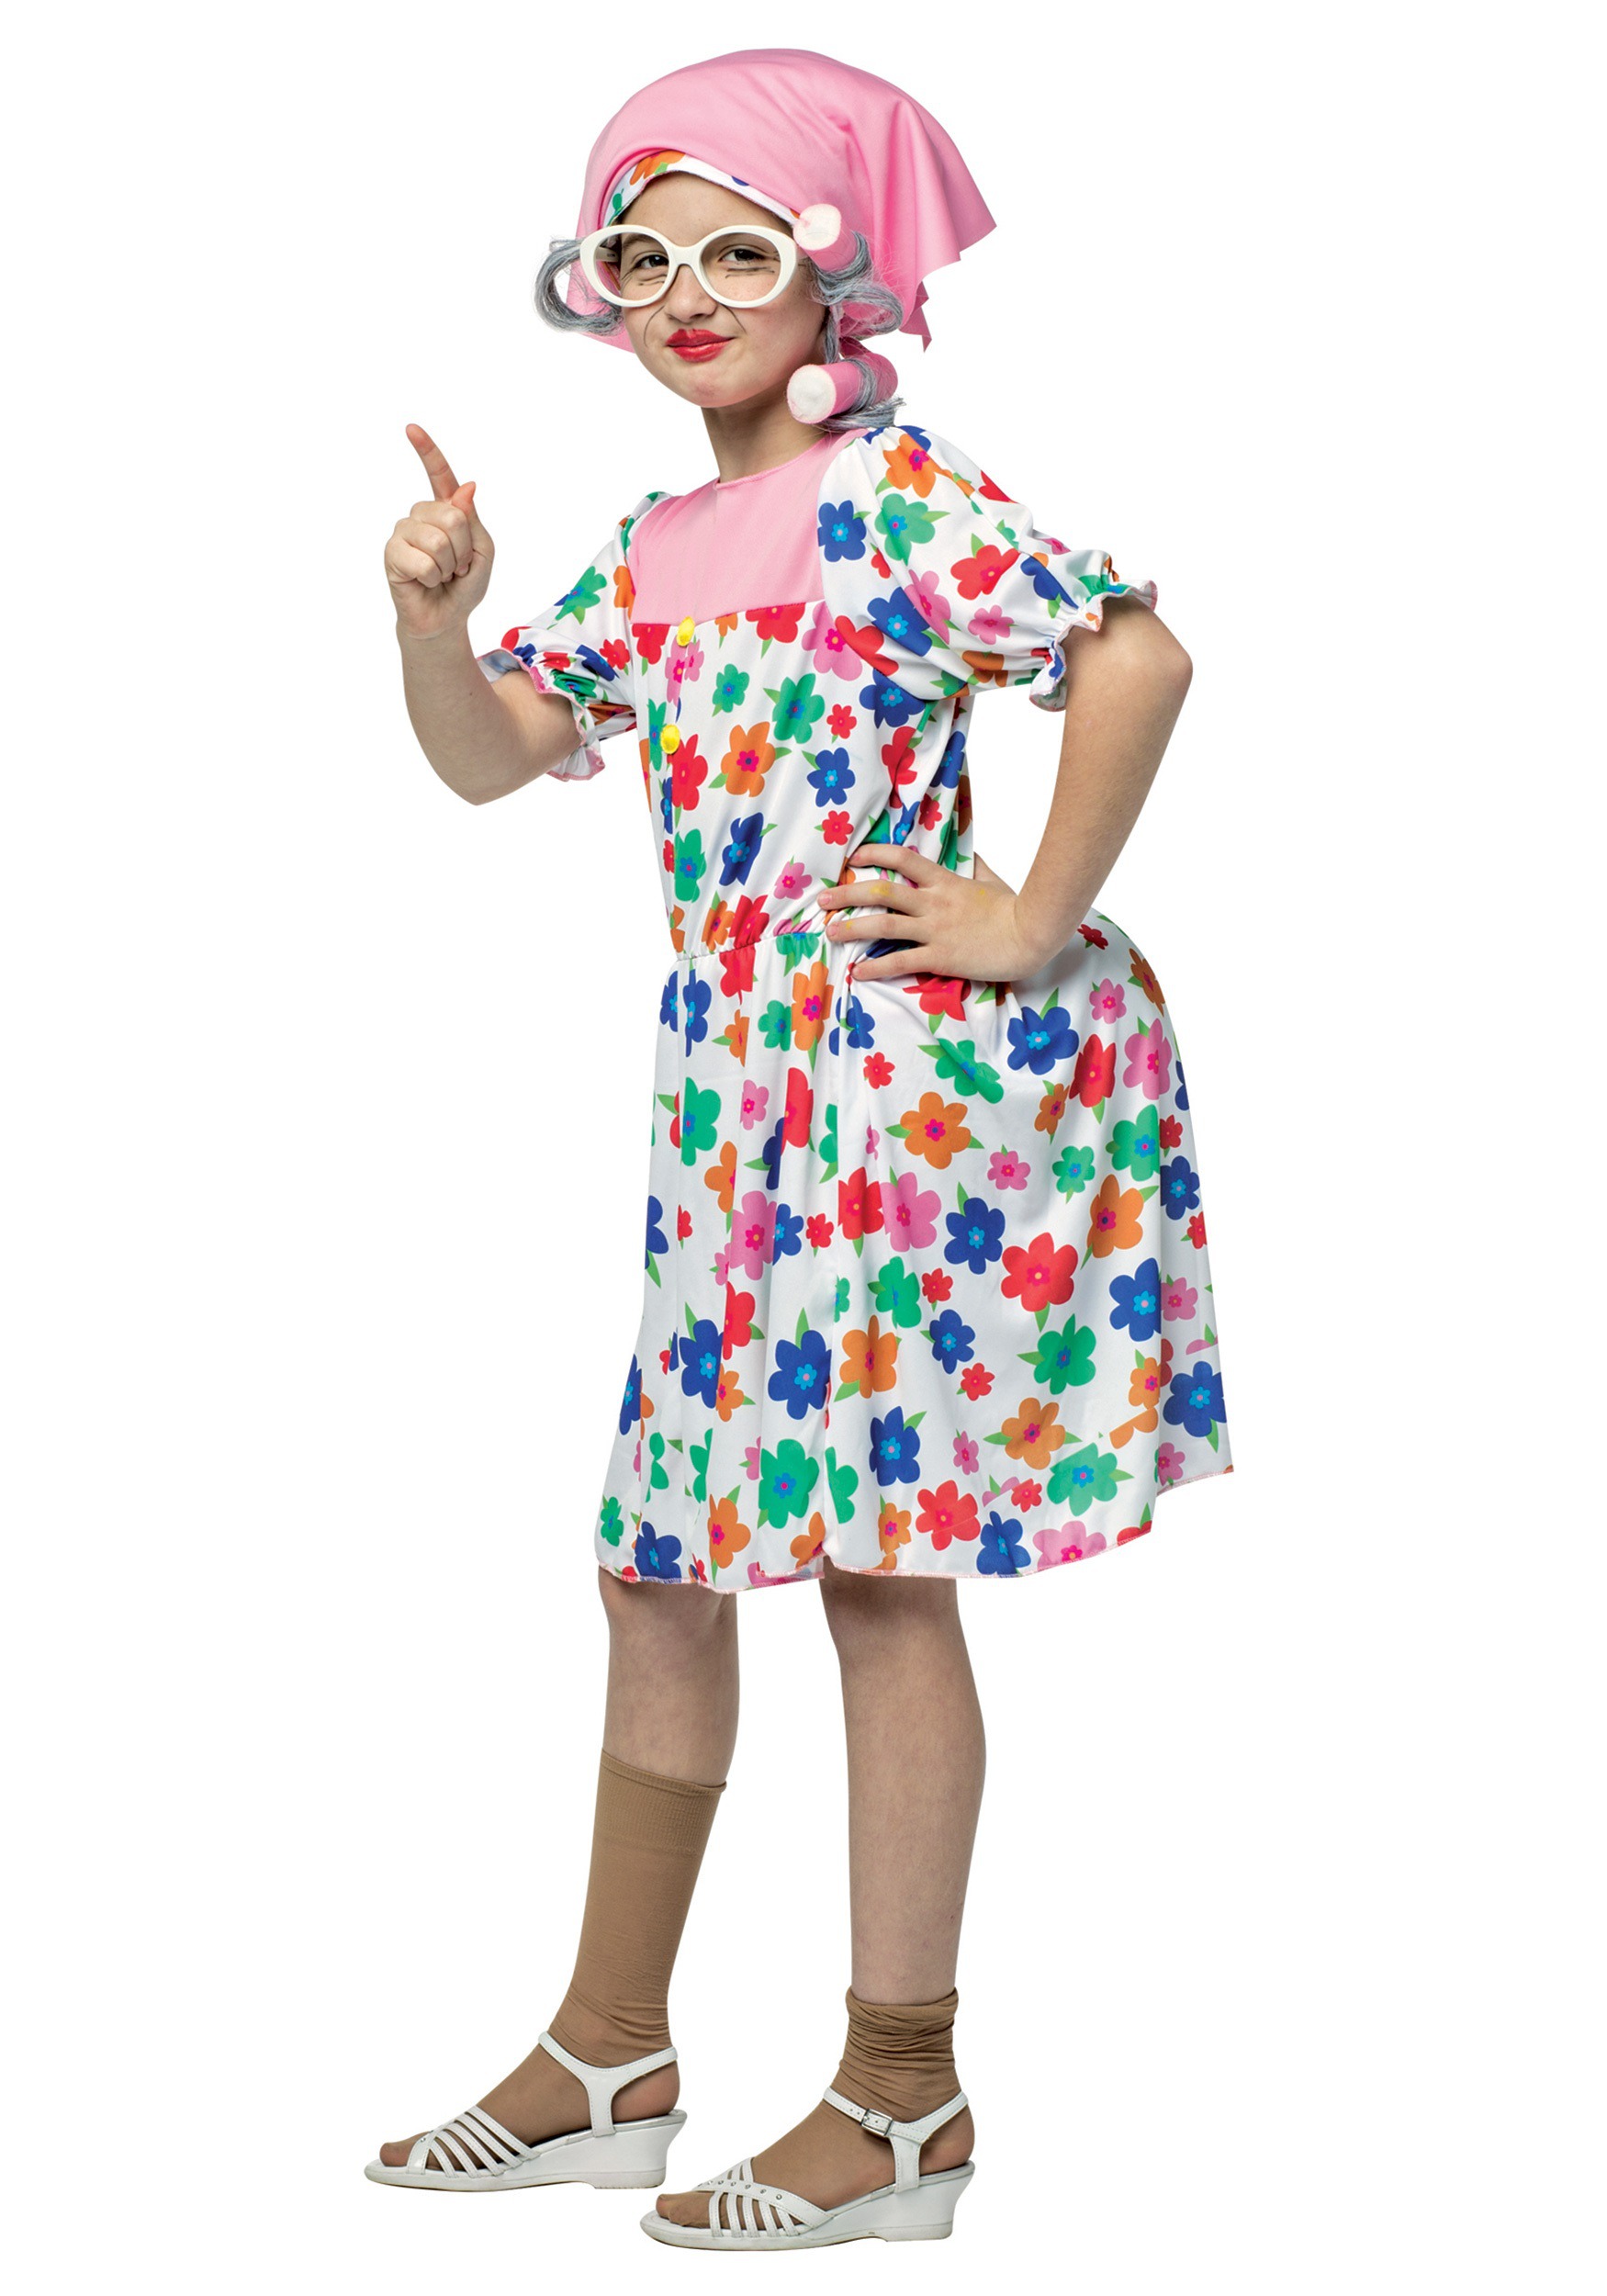 7.) Grandma Costume for Kids